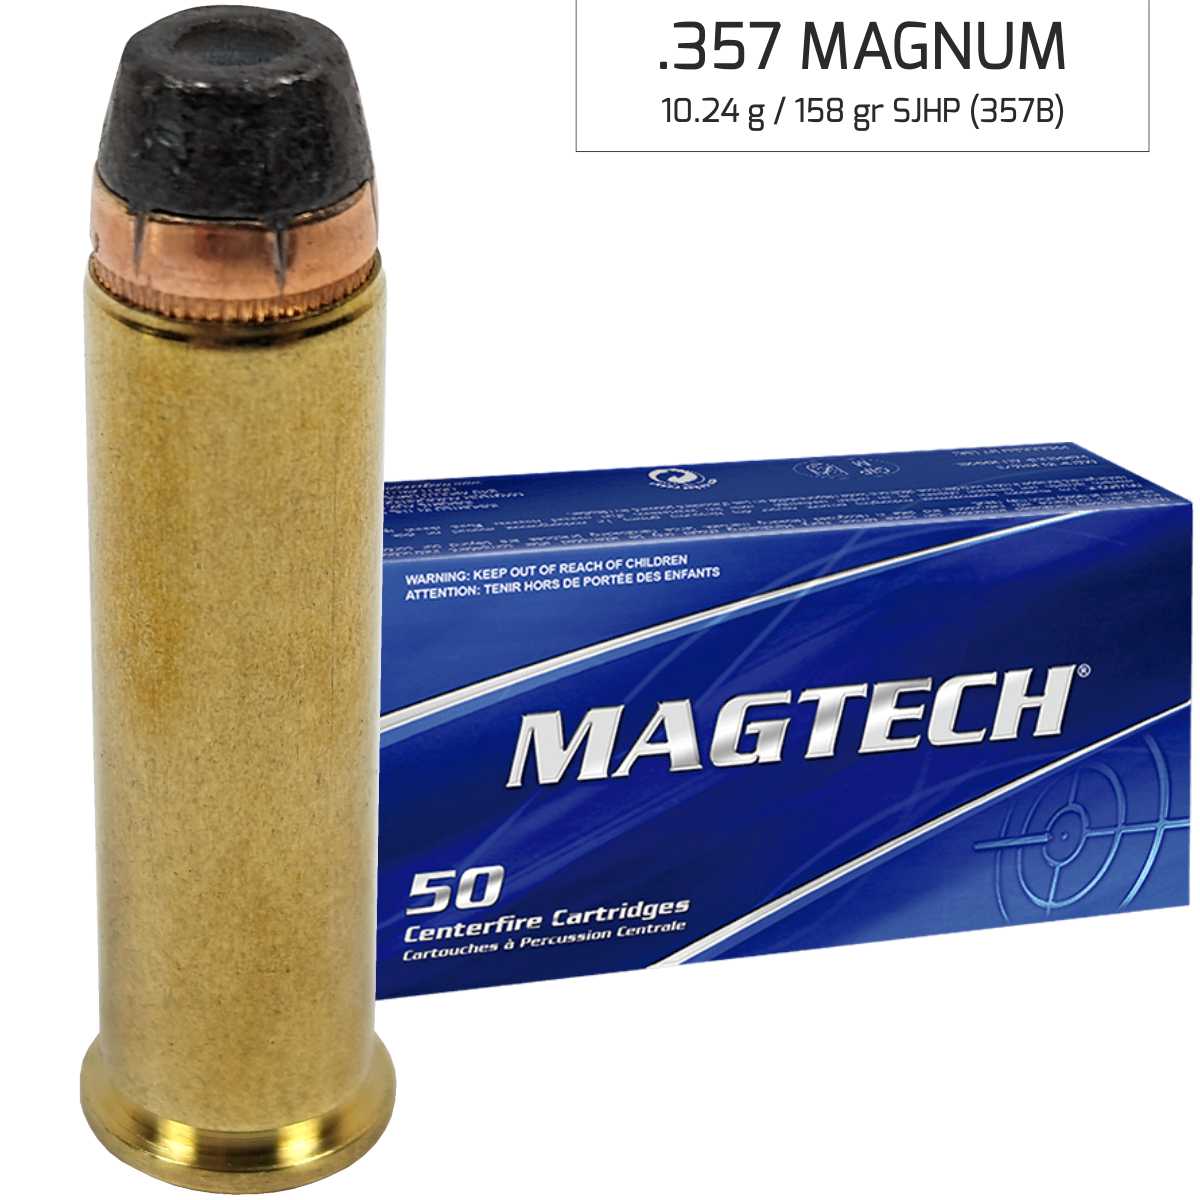 Náboj Magtech 357 MAGNUM FMJ FLAT (357Q) 8,1 g, 125 grs